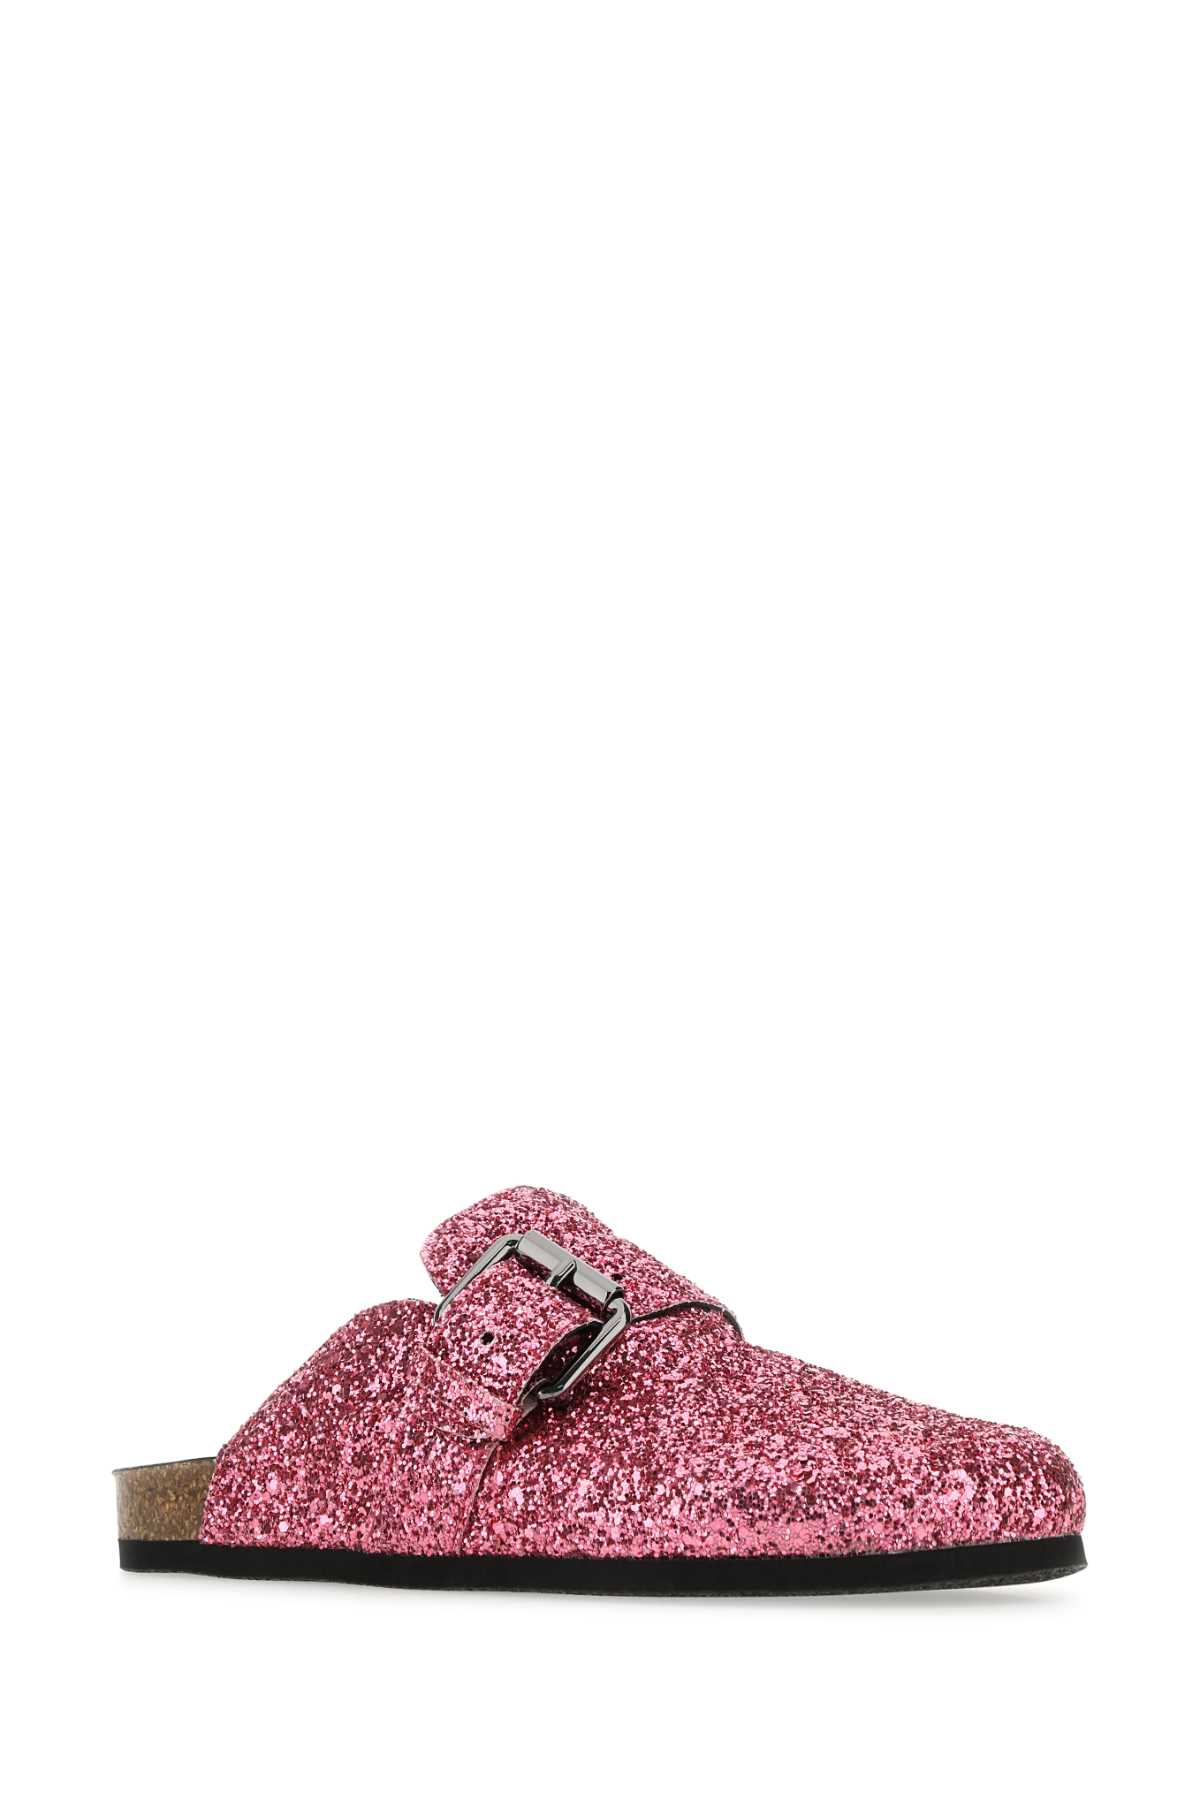 Shop Philosophy Di Lorenzo Serafini Pink Glitters Slippers